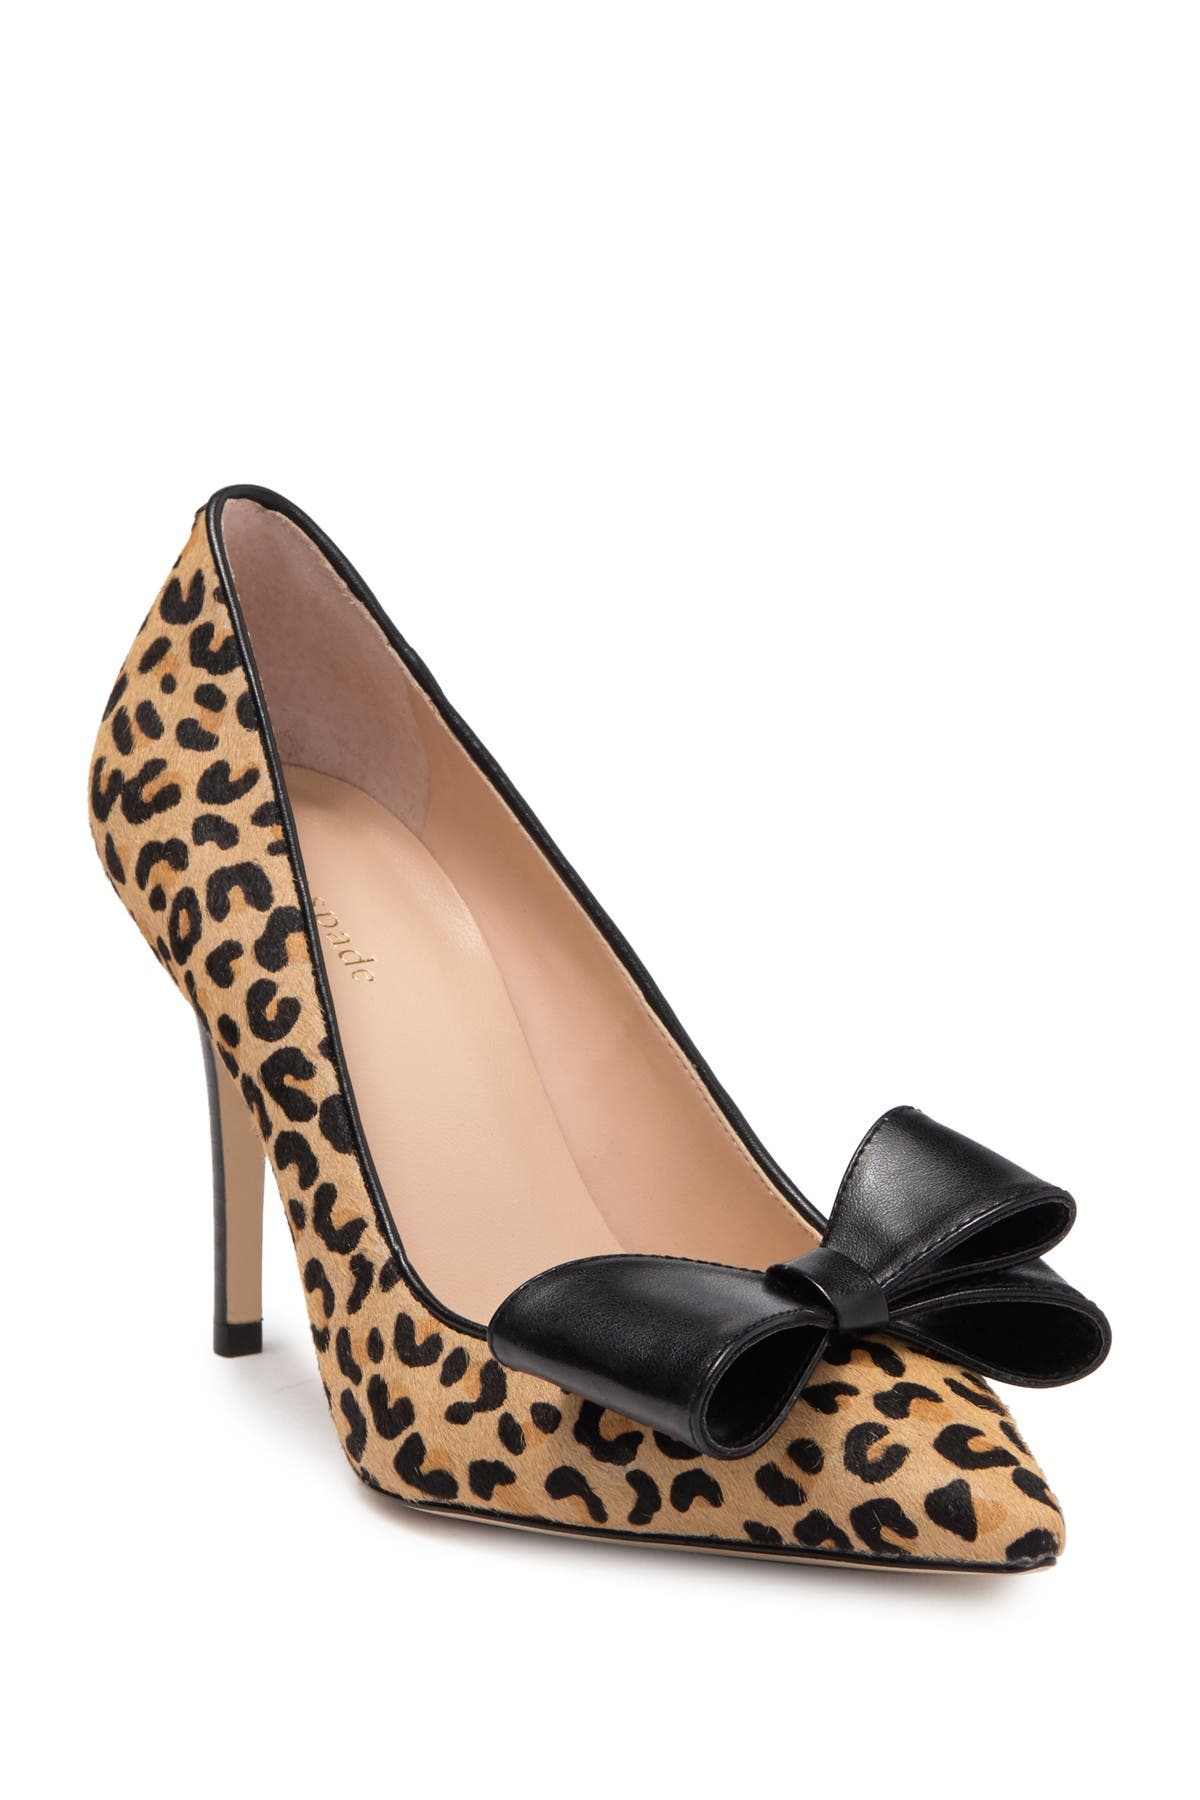 avon leopard print sandals